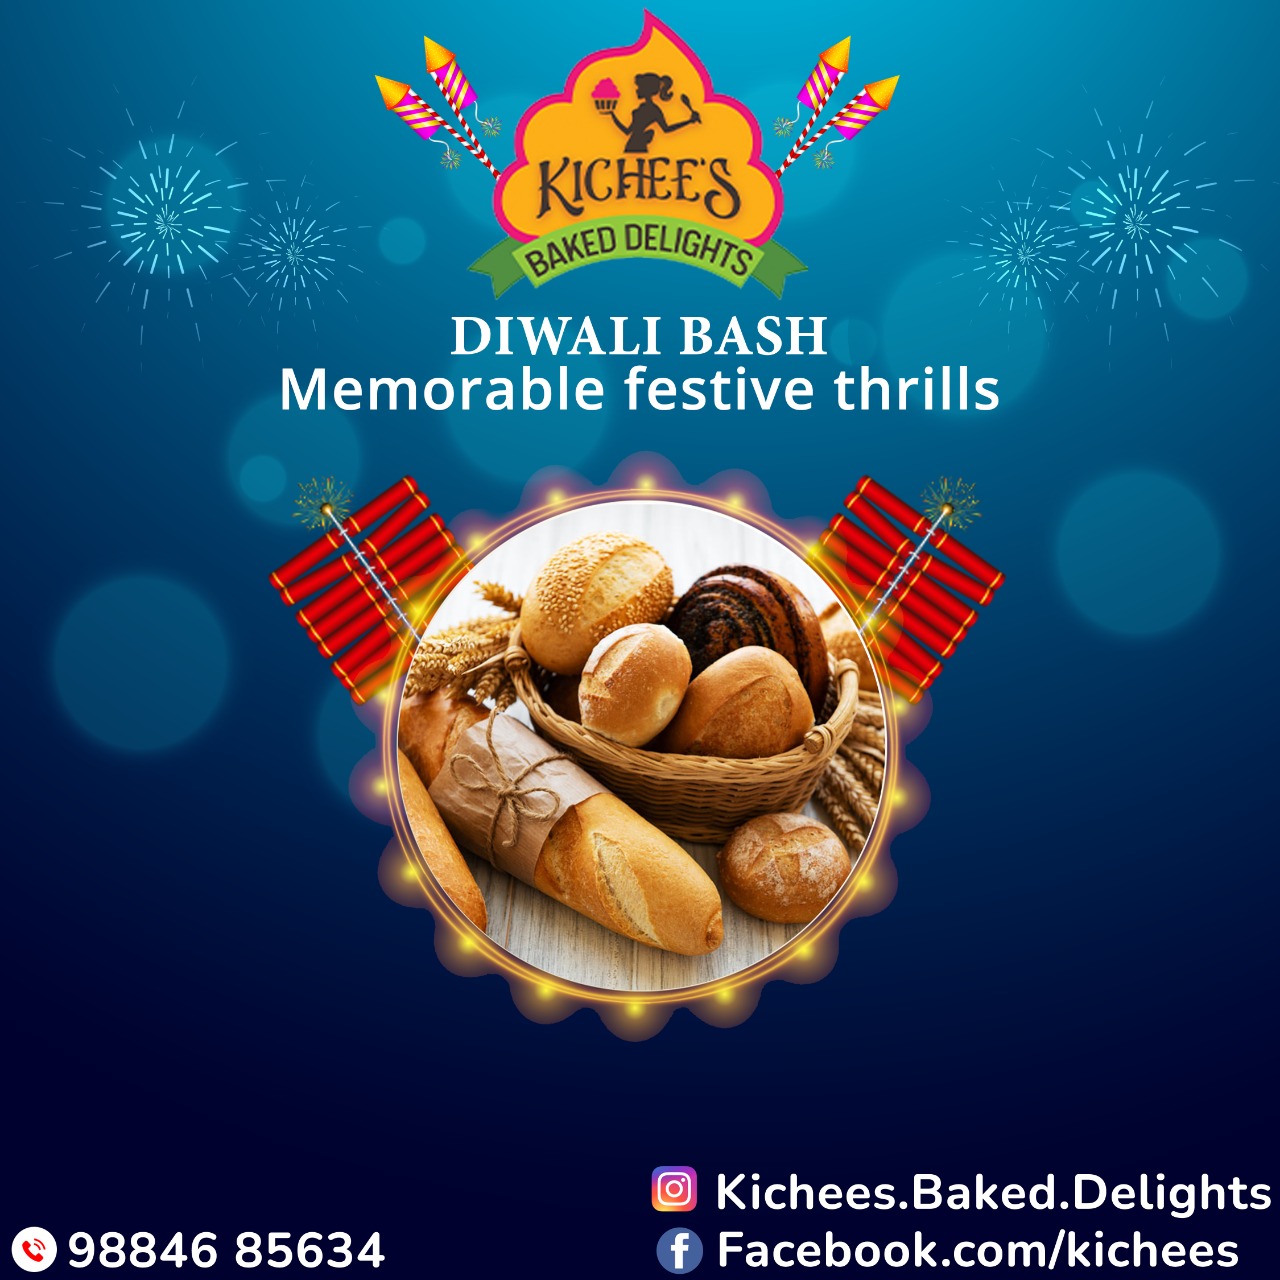 buy cakes for Diwali in Chennai